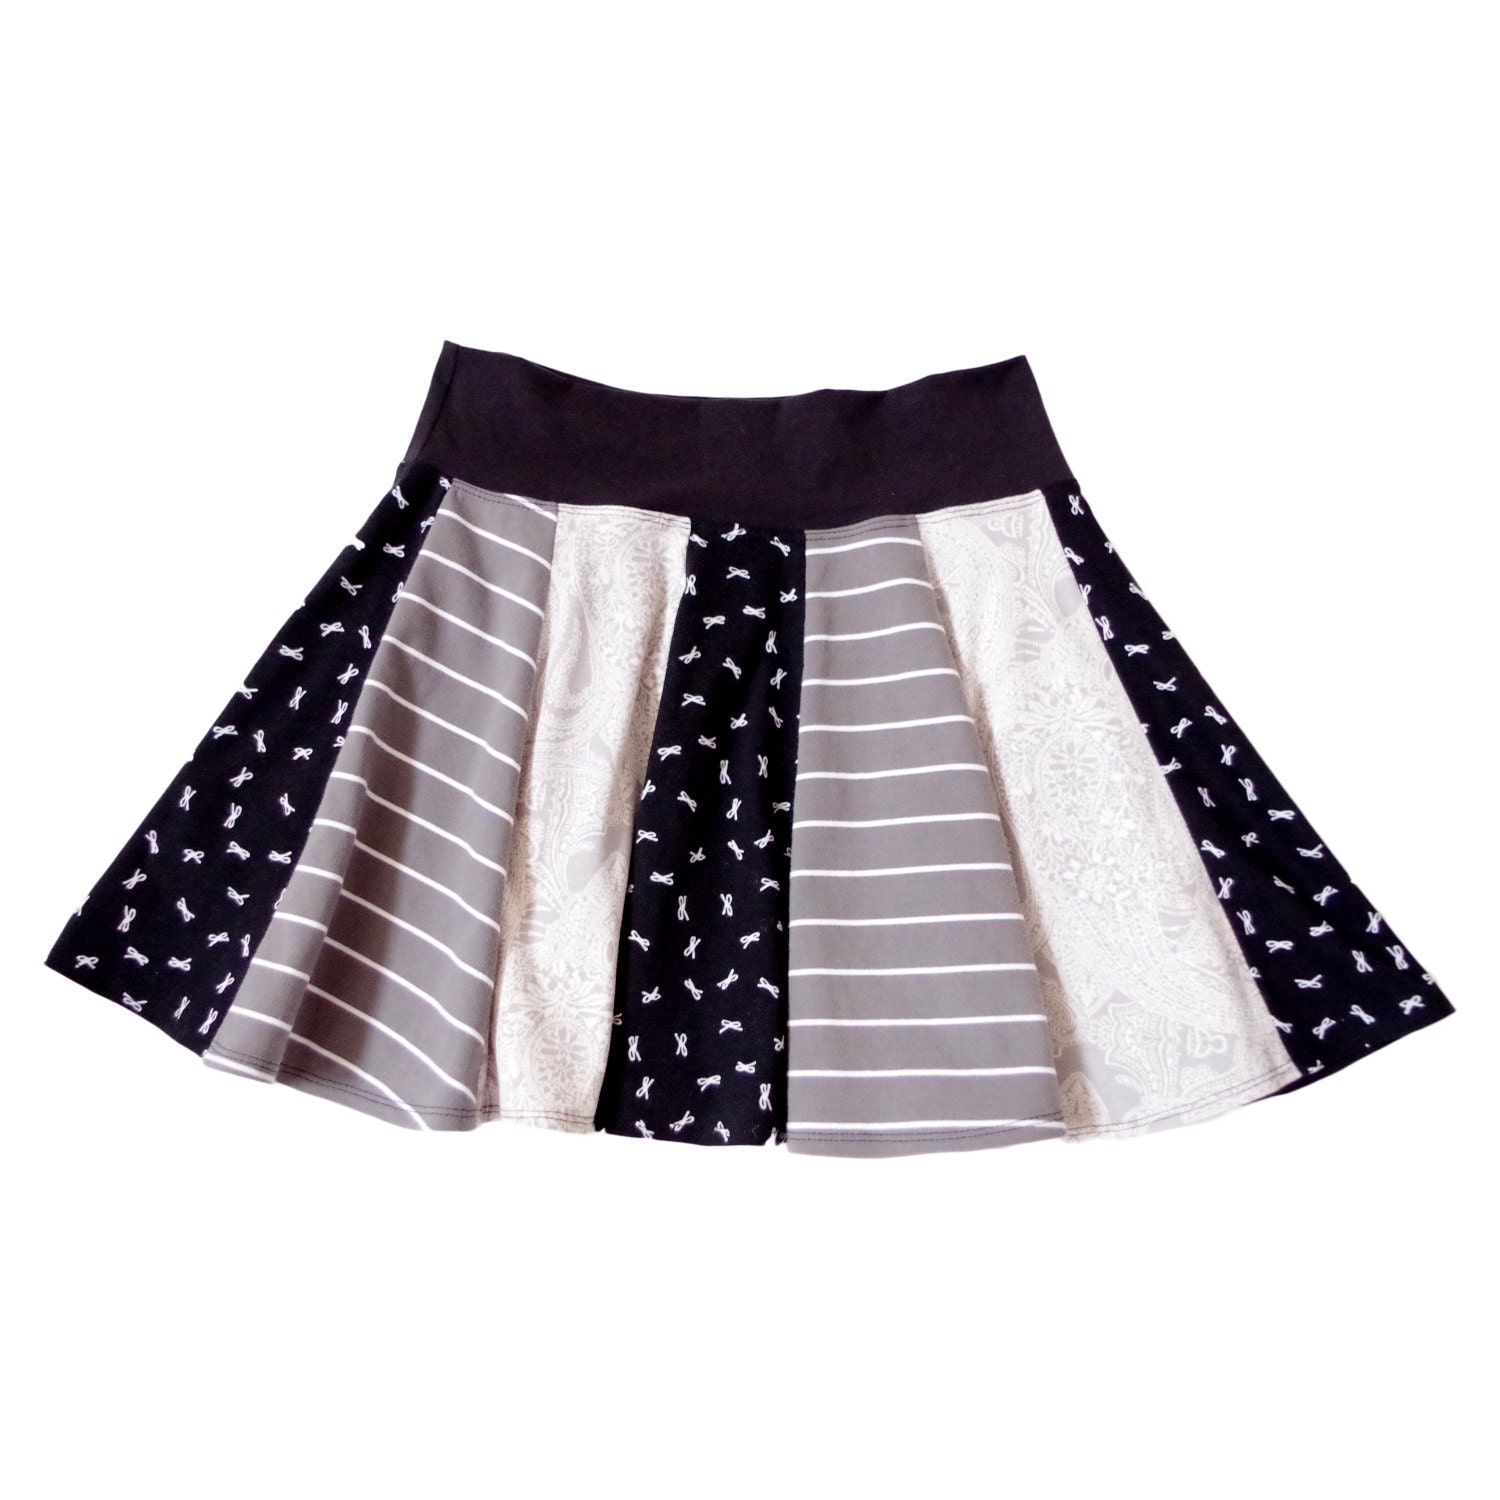 Womens Medium full circle short skirt: Black white and gray.